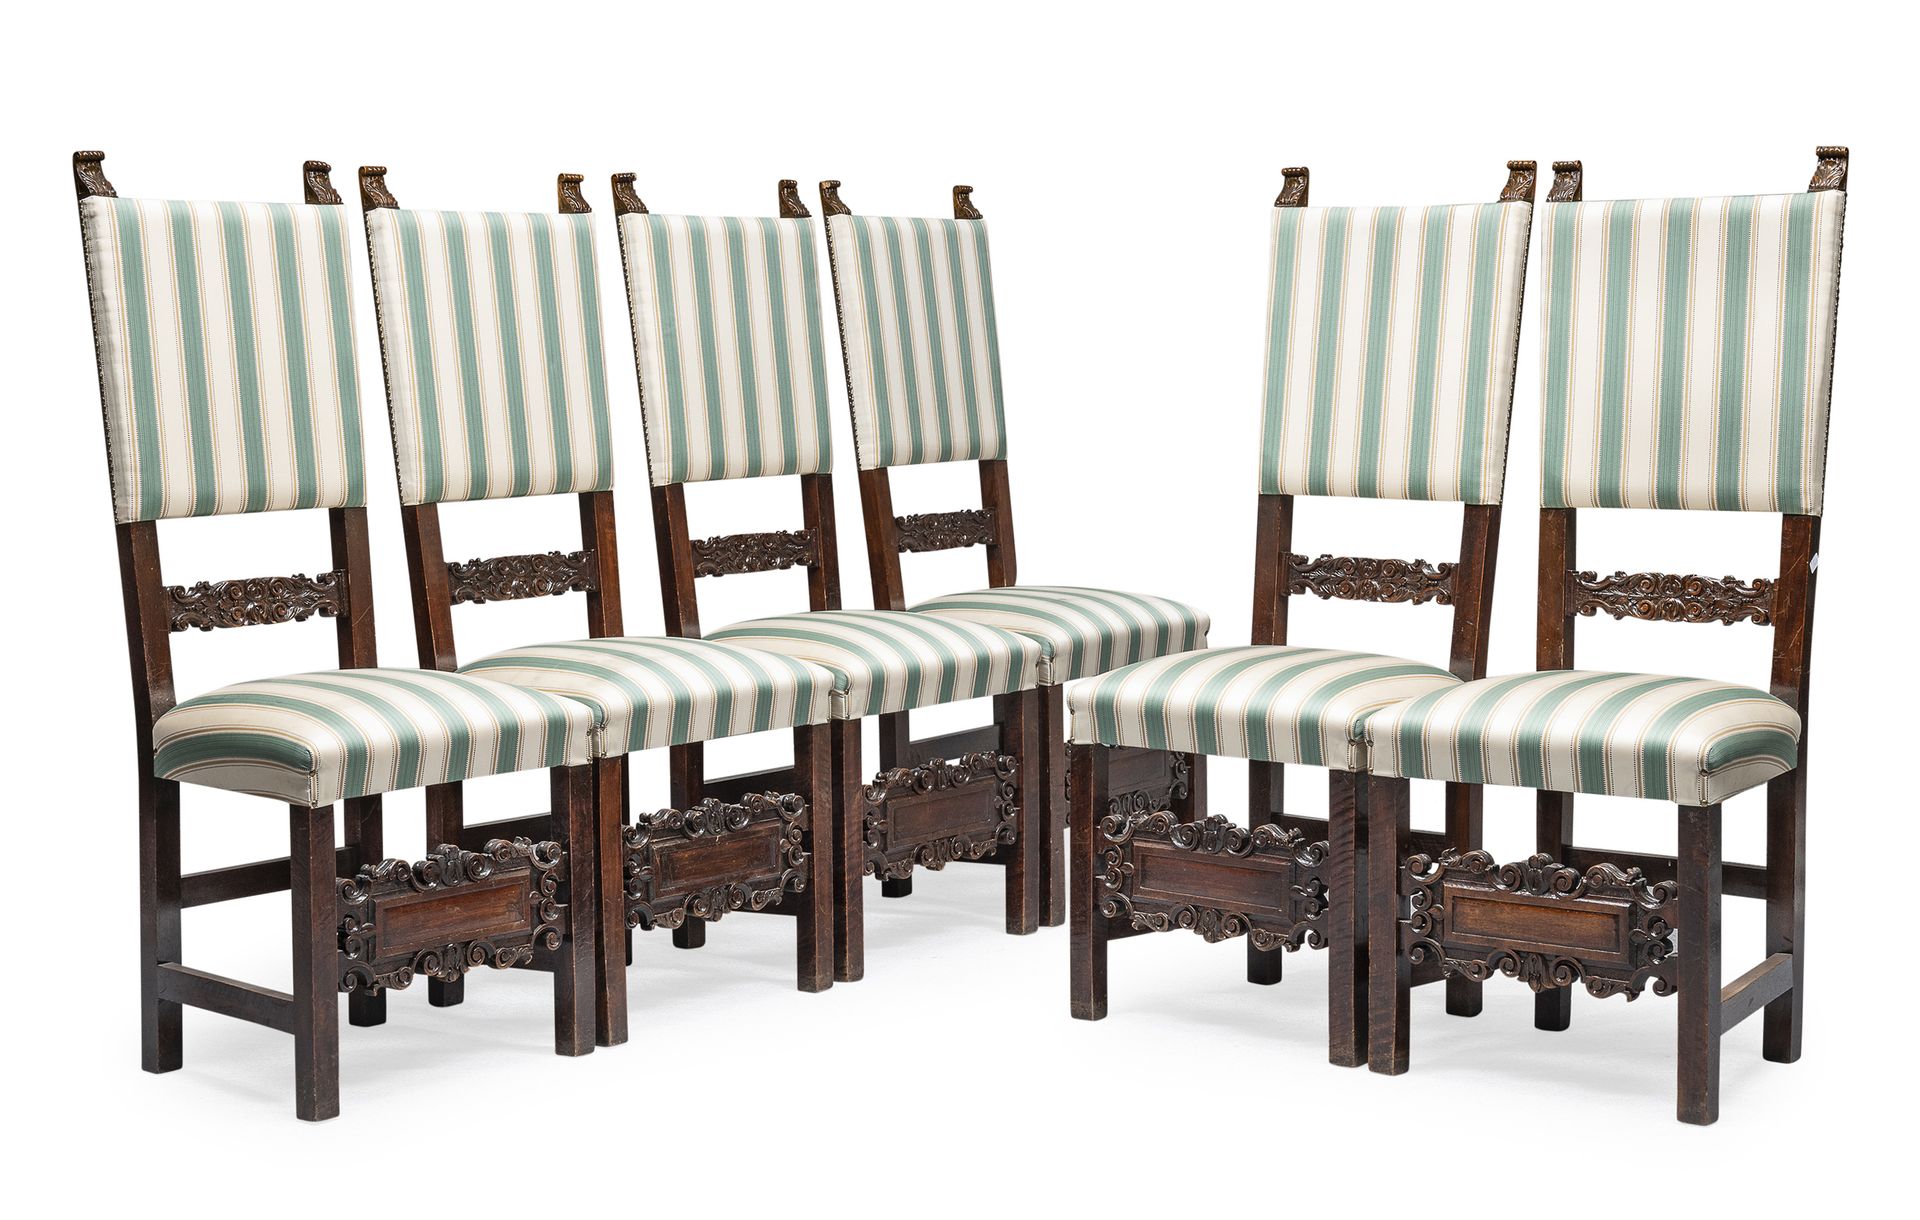 Null 文艺复兴时期的胡桃木椅子


有长方形的靠背，直腿和雕刻着植物图案的横杆。


尺寸为127 x 41 x 45厘米。